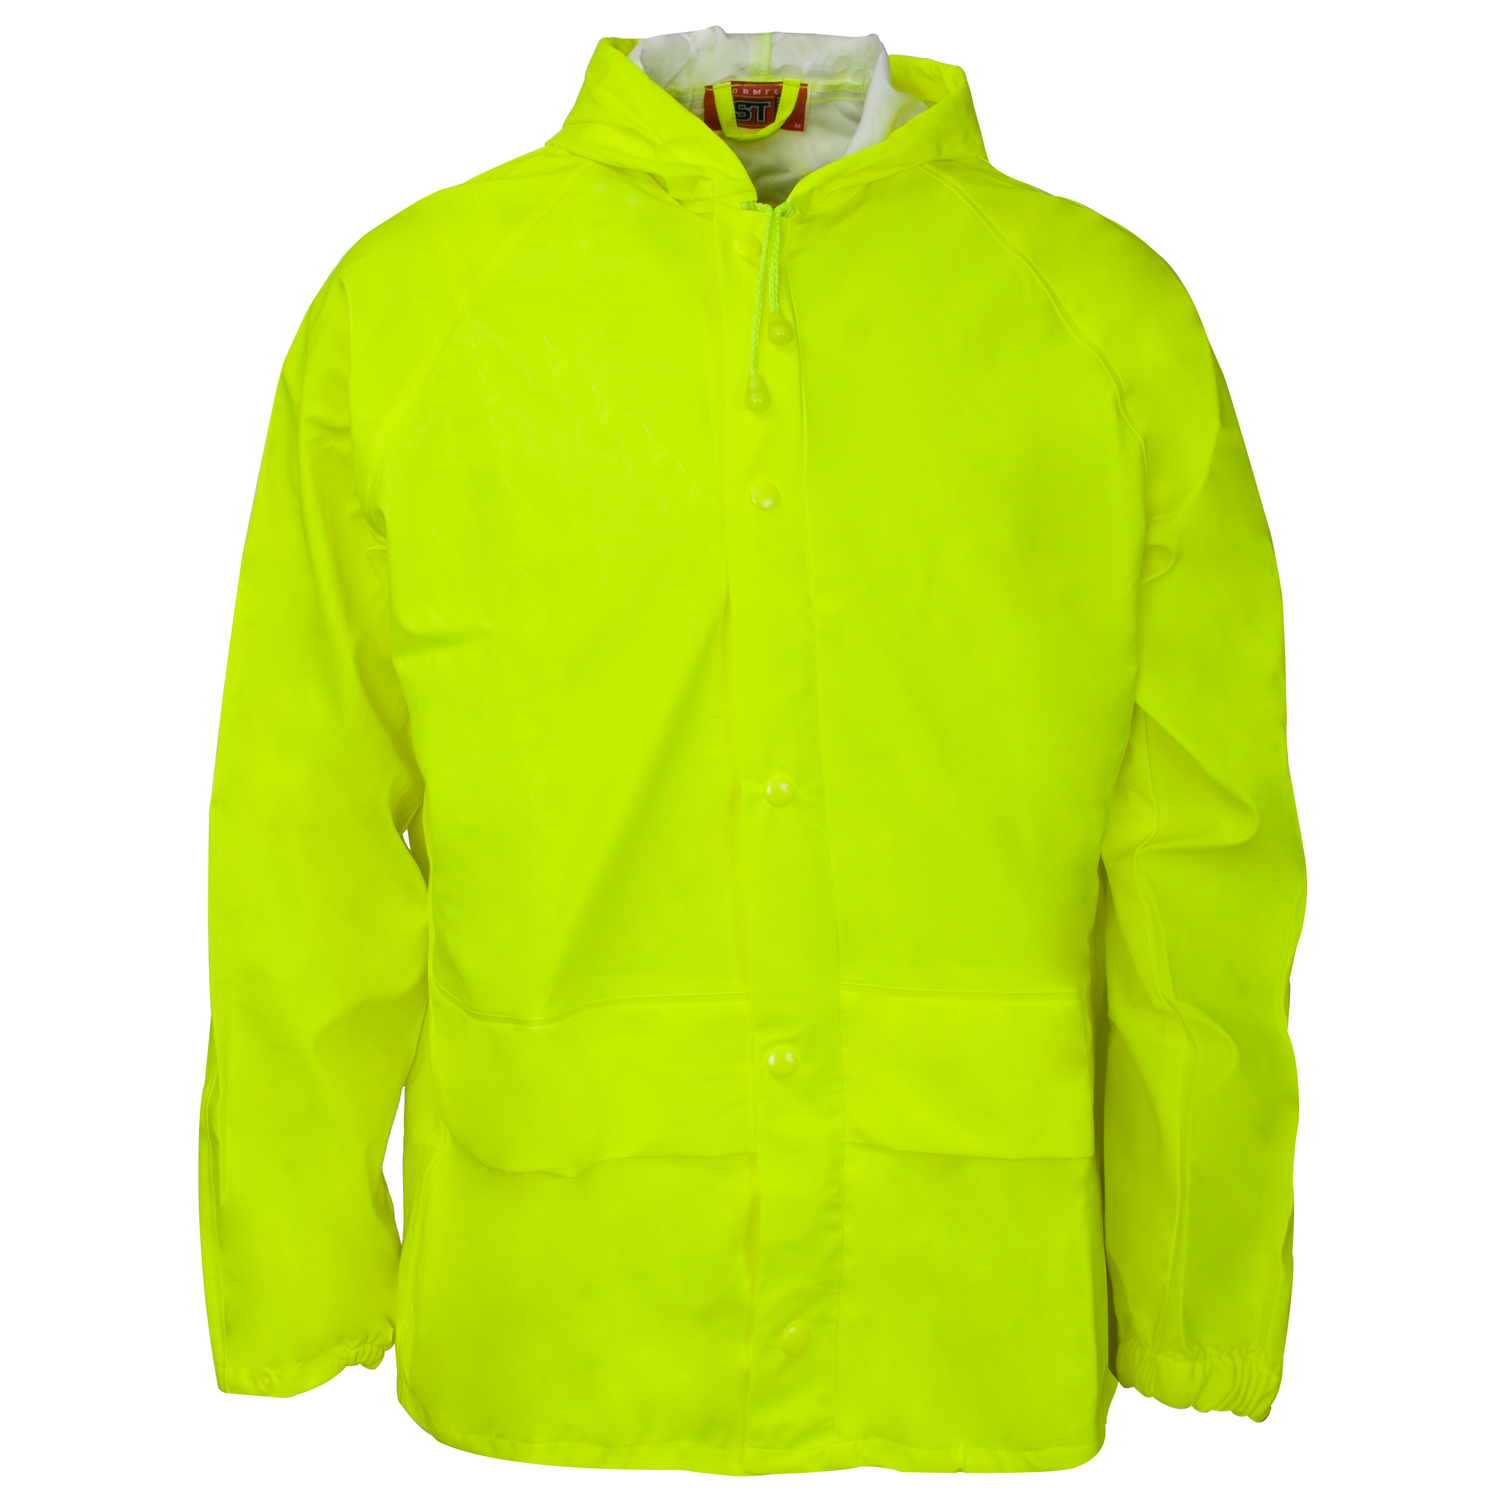 Stormflex PU Jacket Breathable Yellow - Small